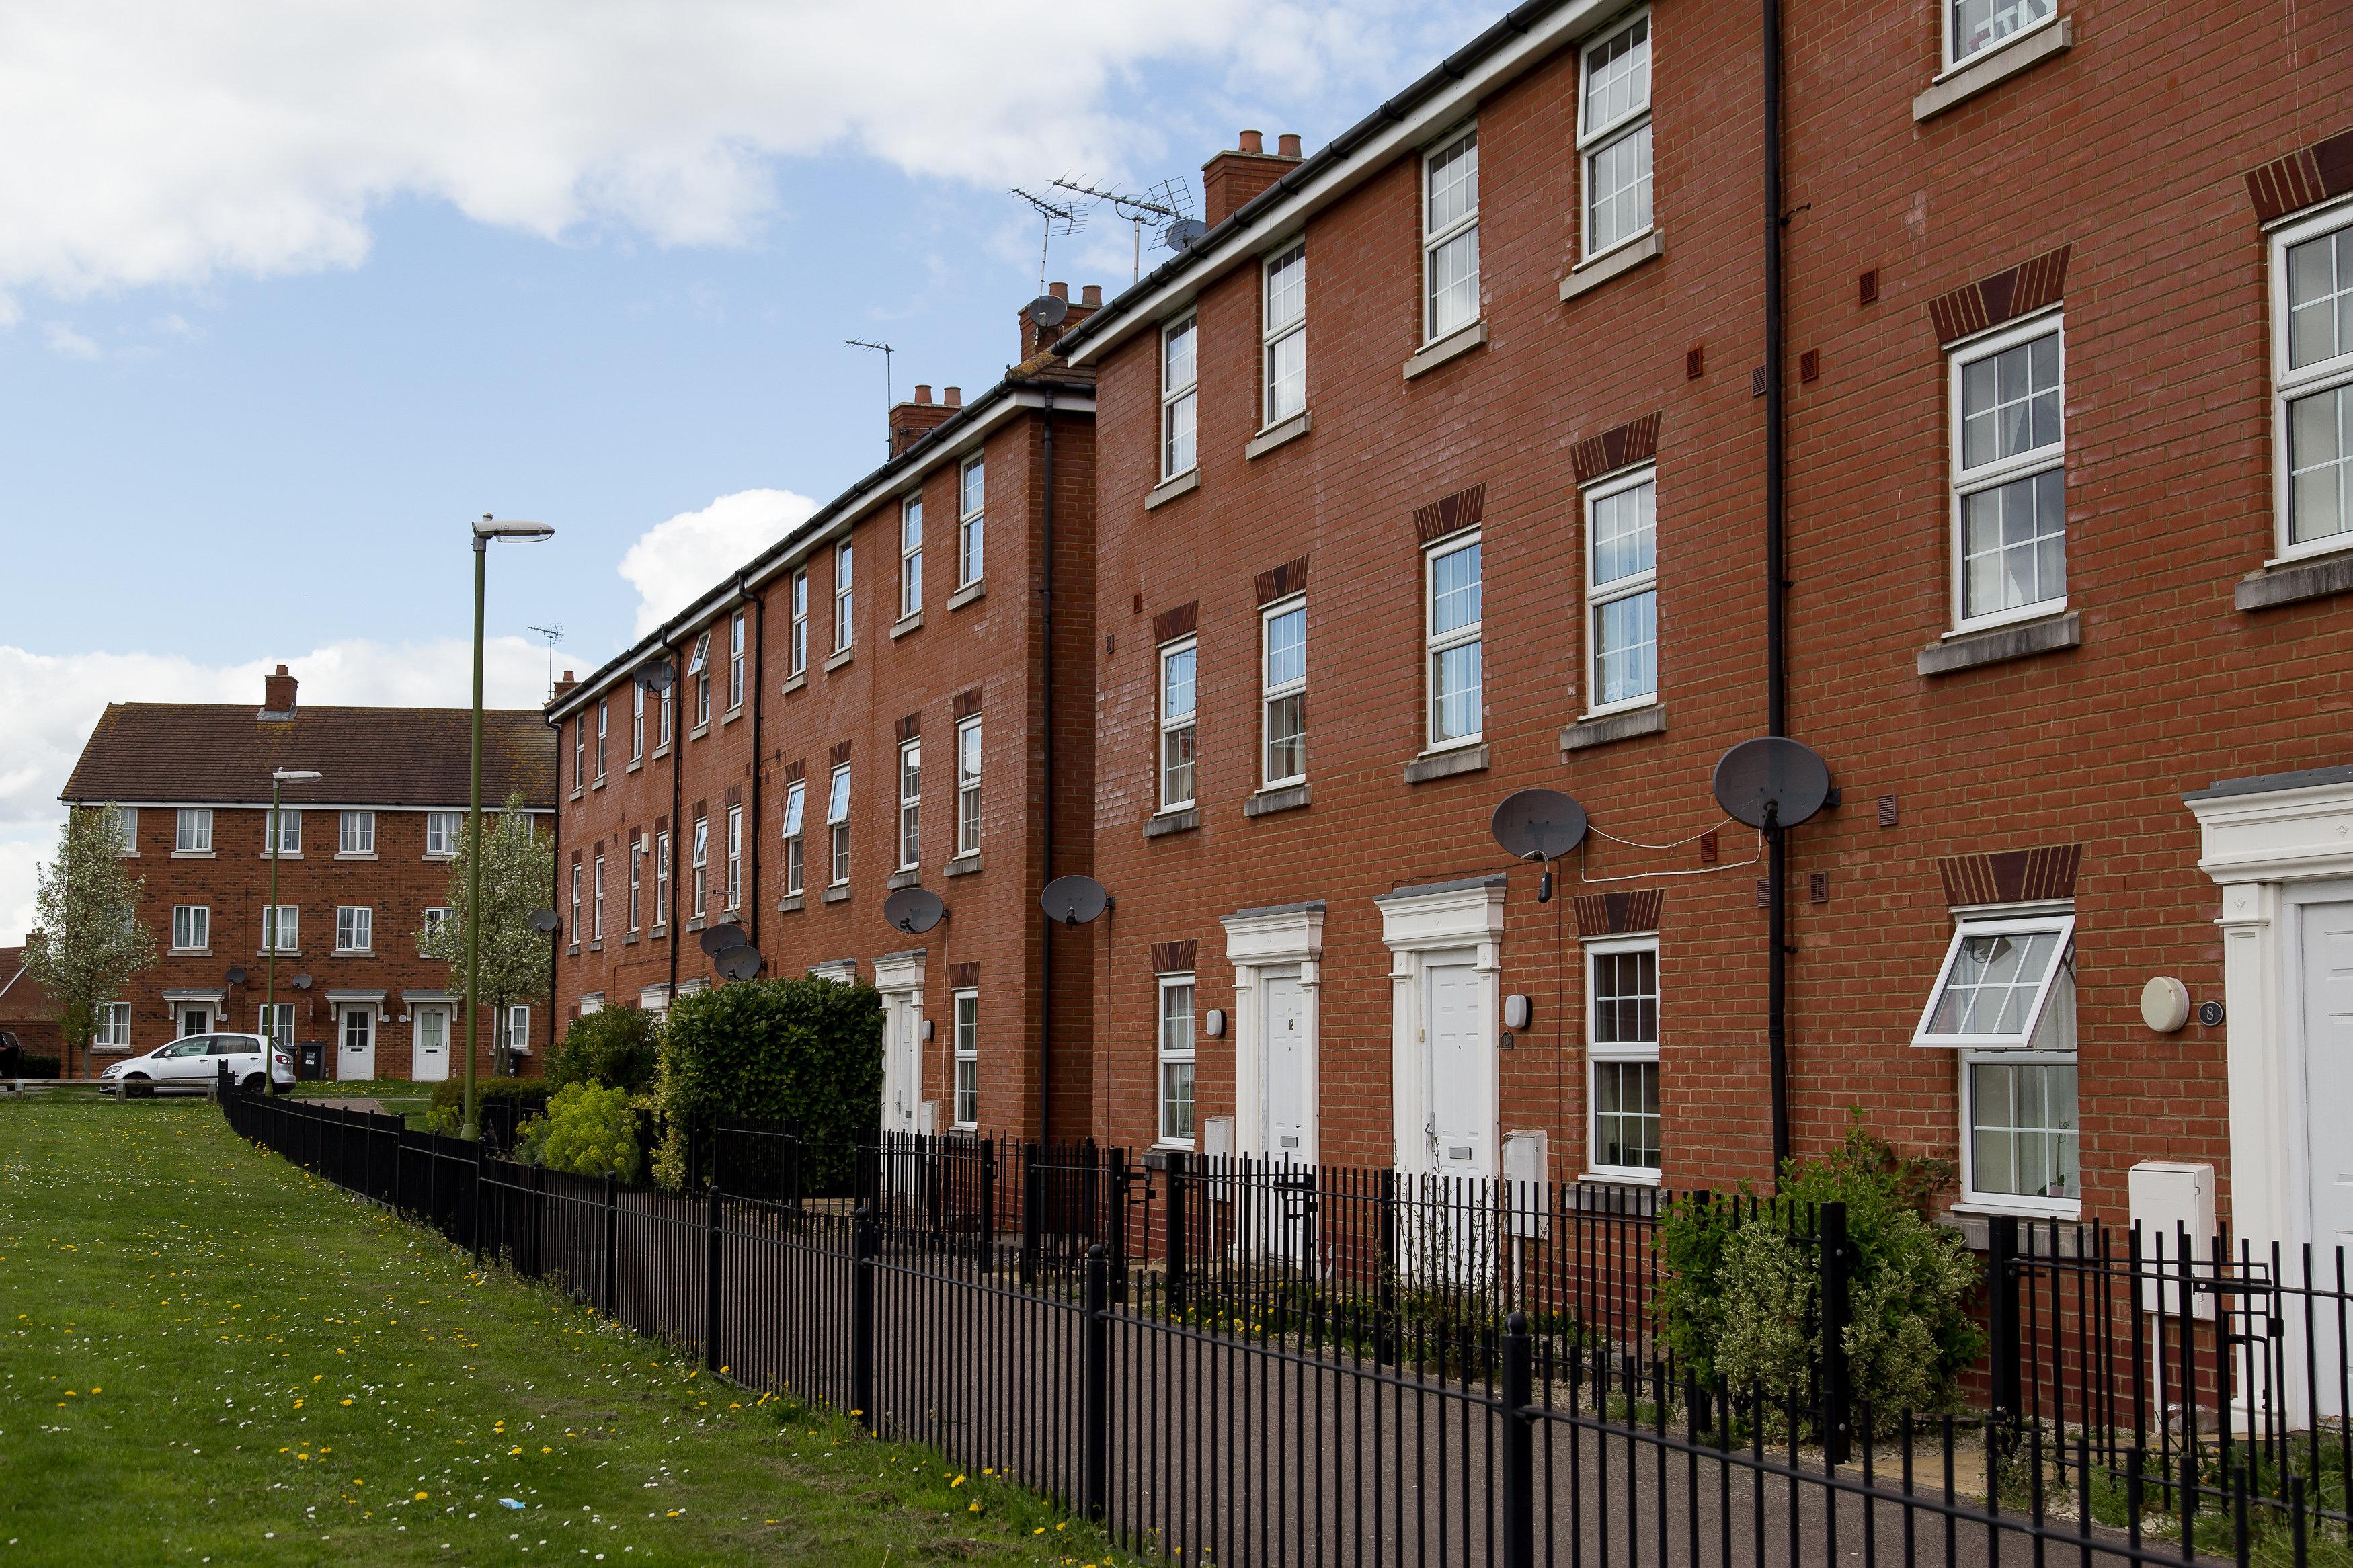 Row of terraced red brick, three storey houses